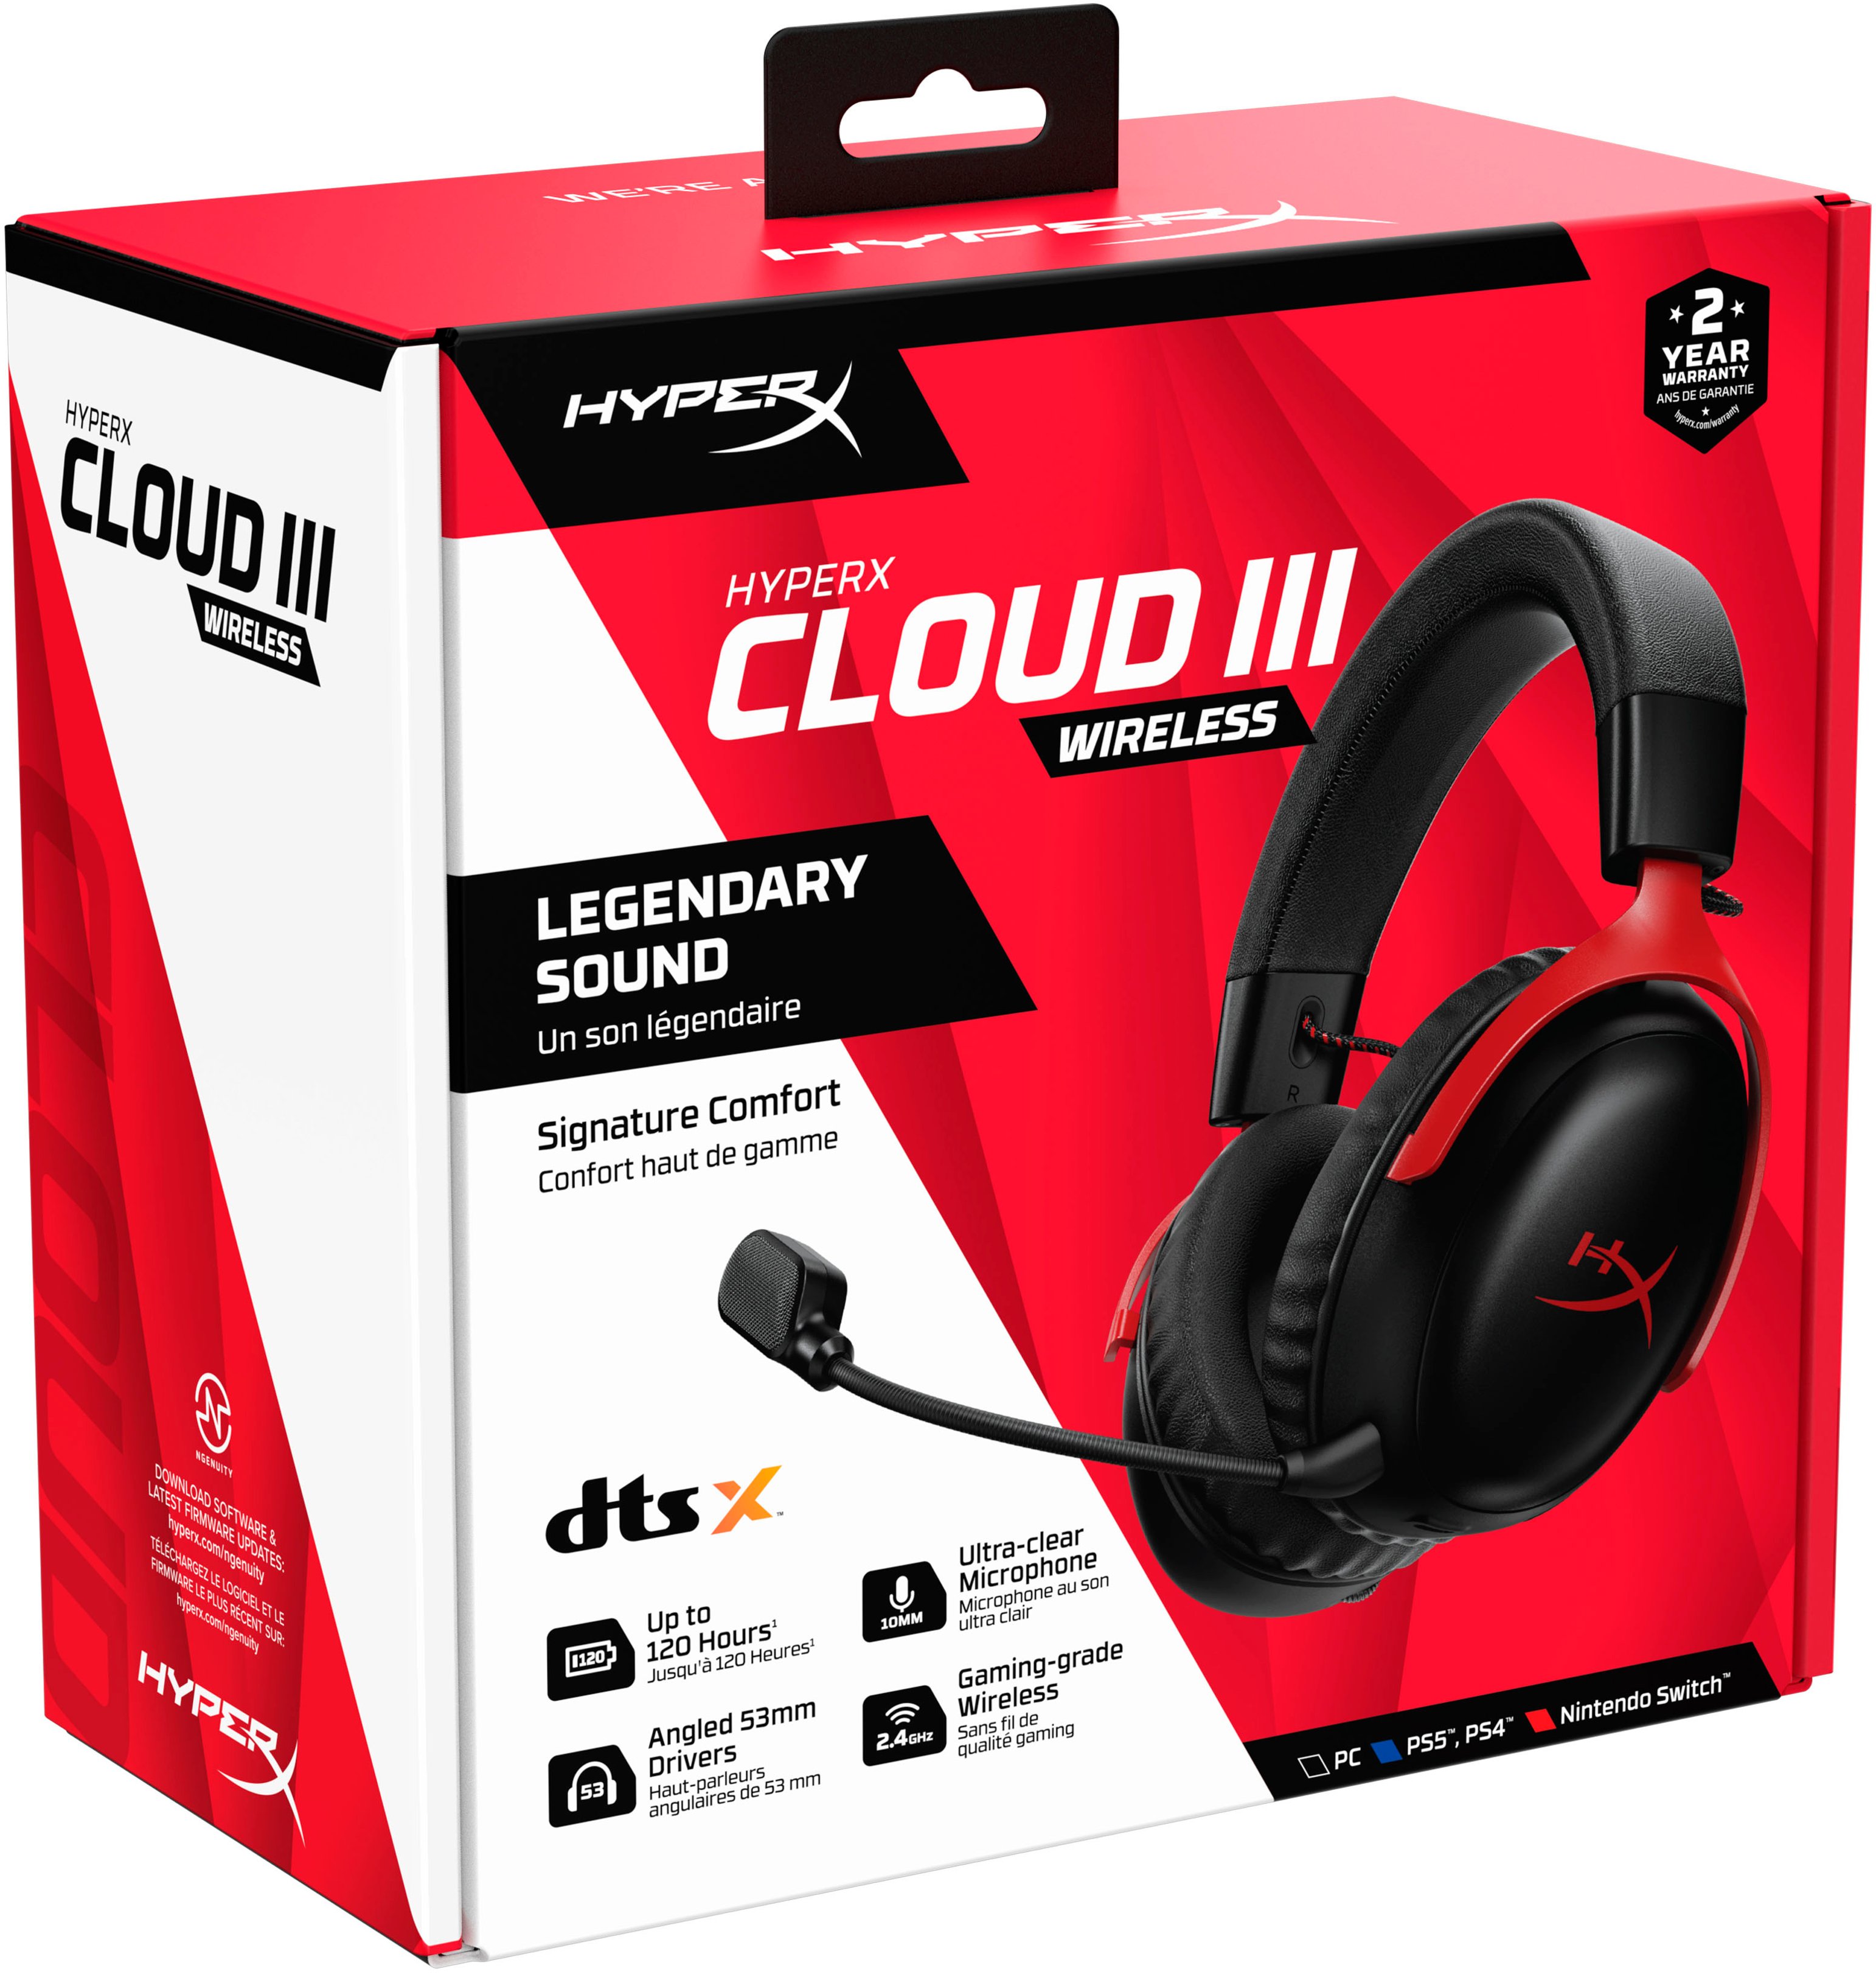 HyperX Cloud III Wireless Gaming Headset review — It's like wearing a cloud  — GAMINGTREND